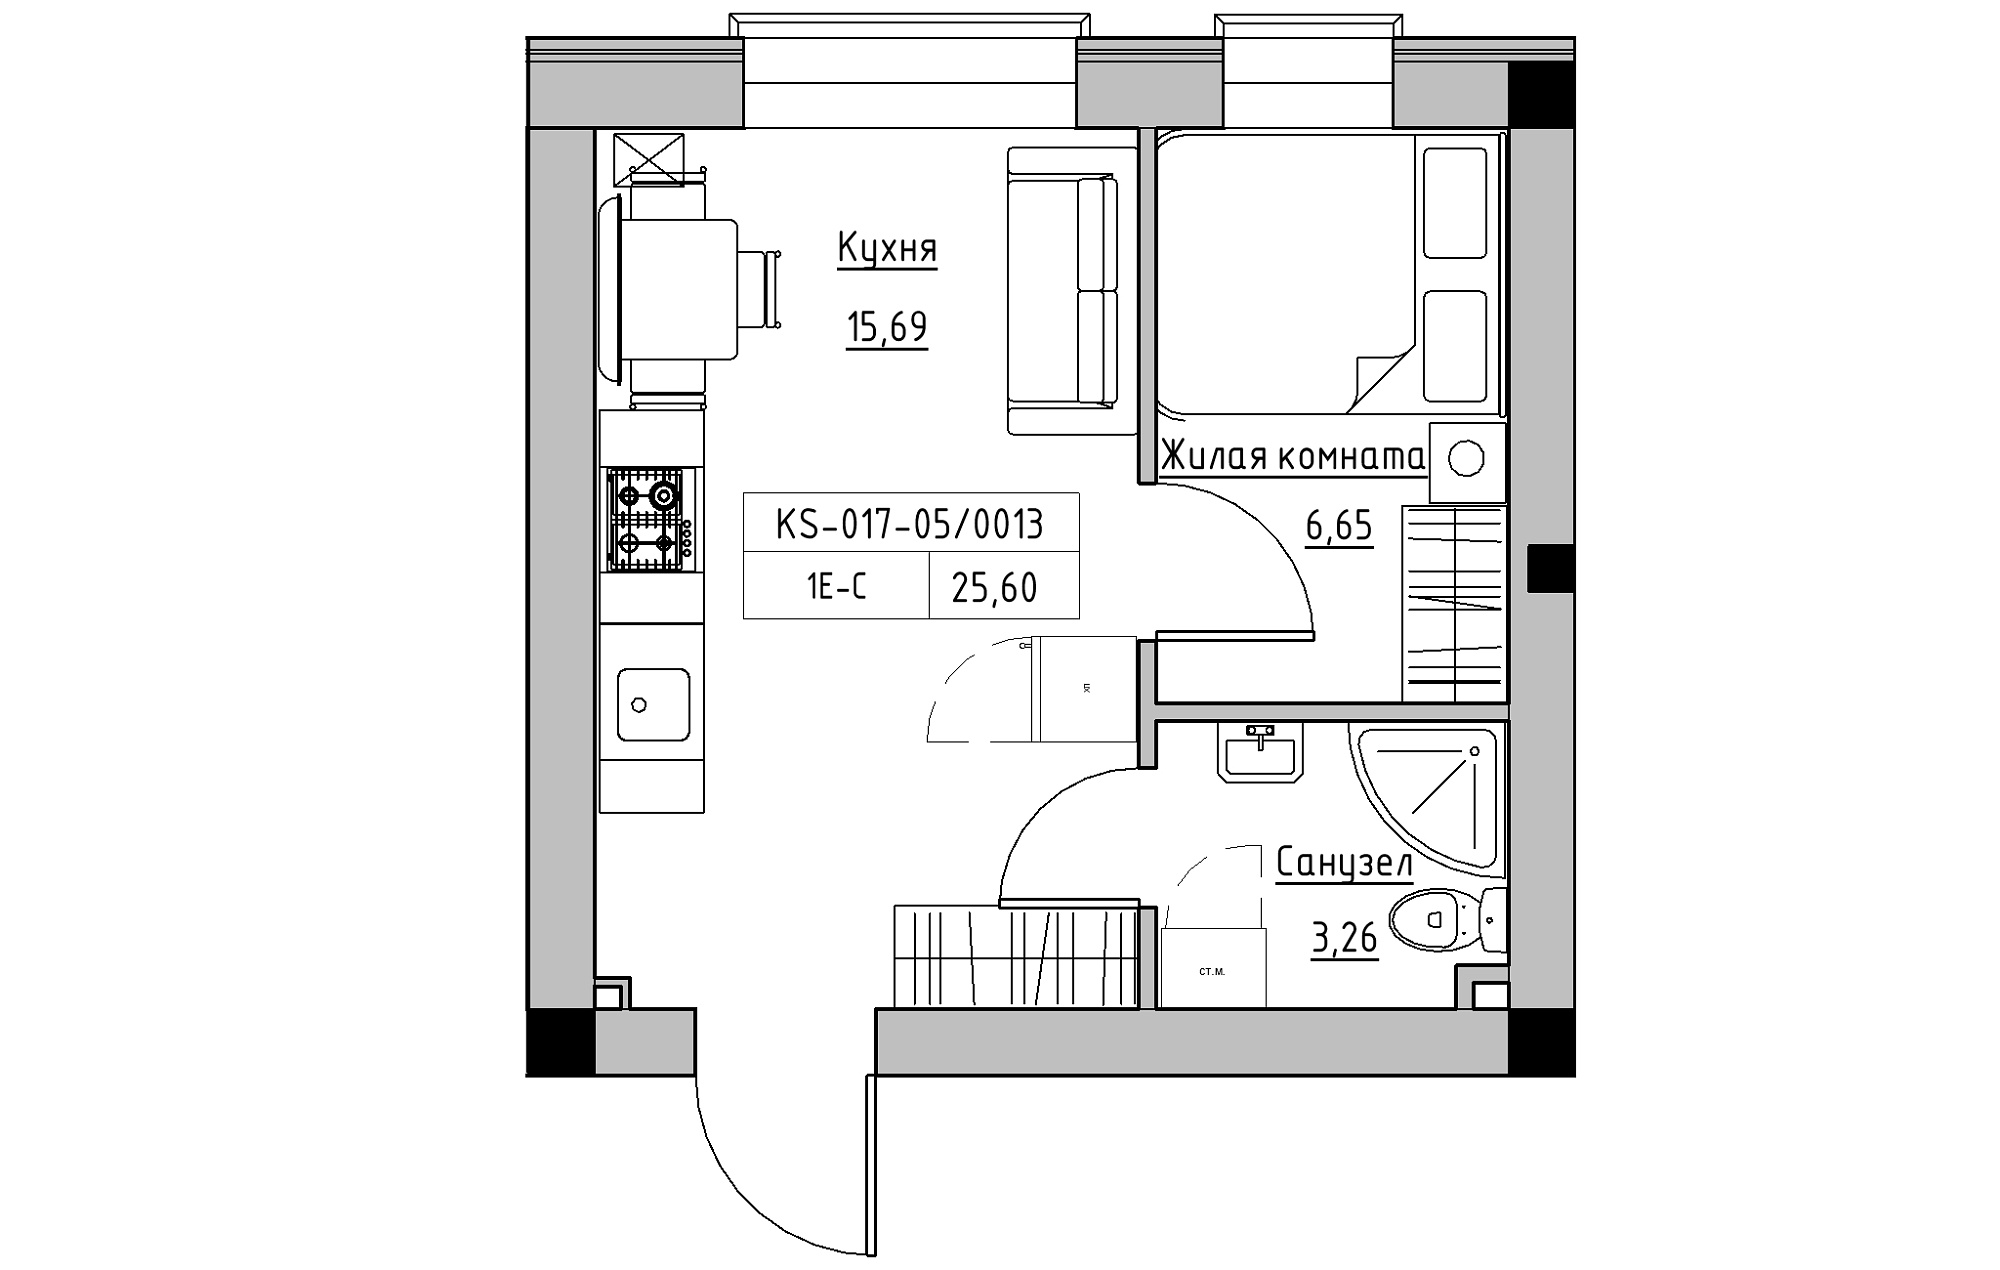 Planning 1-rm flats area 25.6m2, KS-017-05/0013.